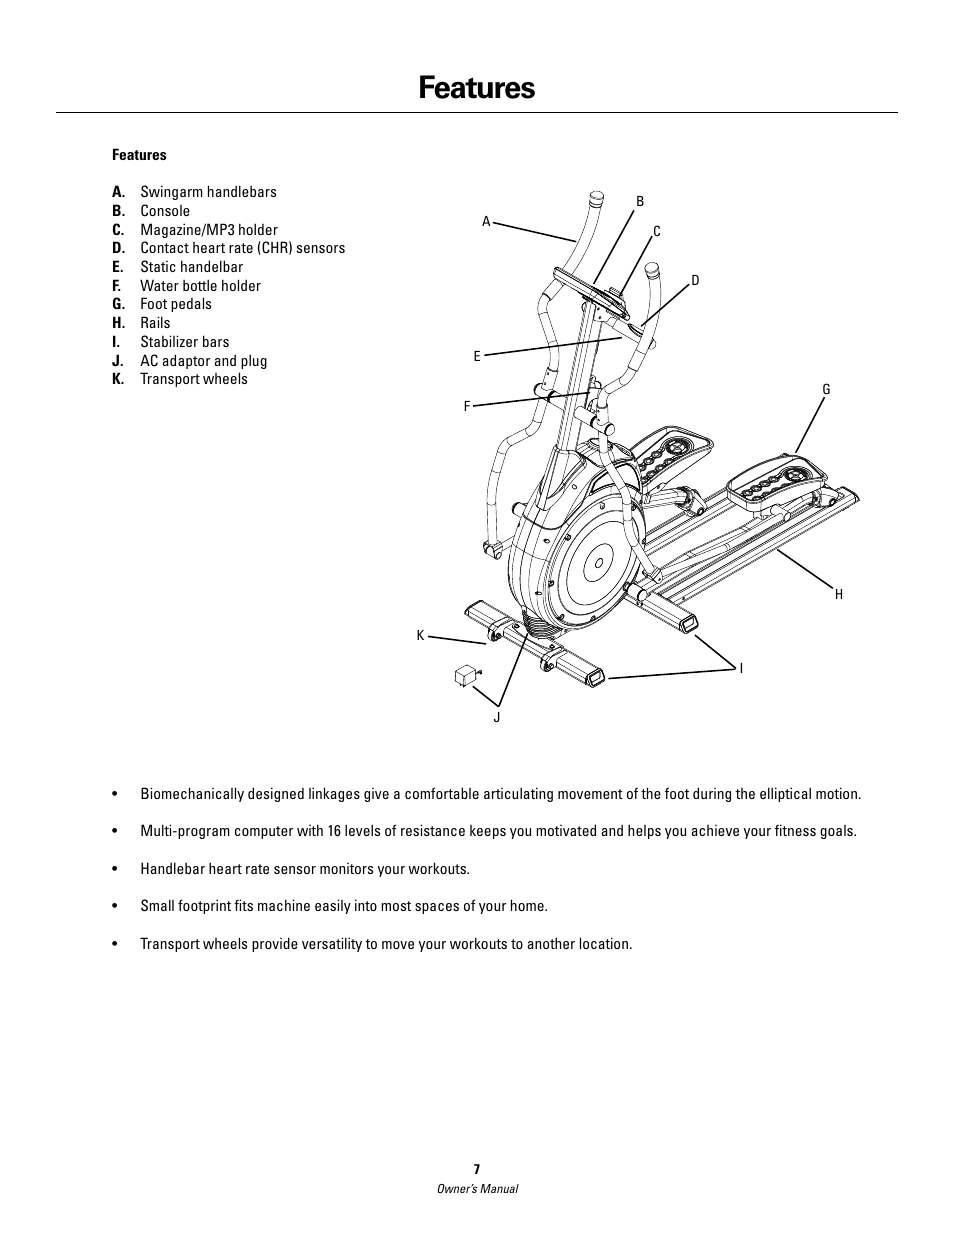 Features | Schwinn 420 User Manual | Page 7 / 24